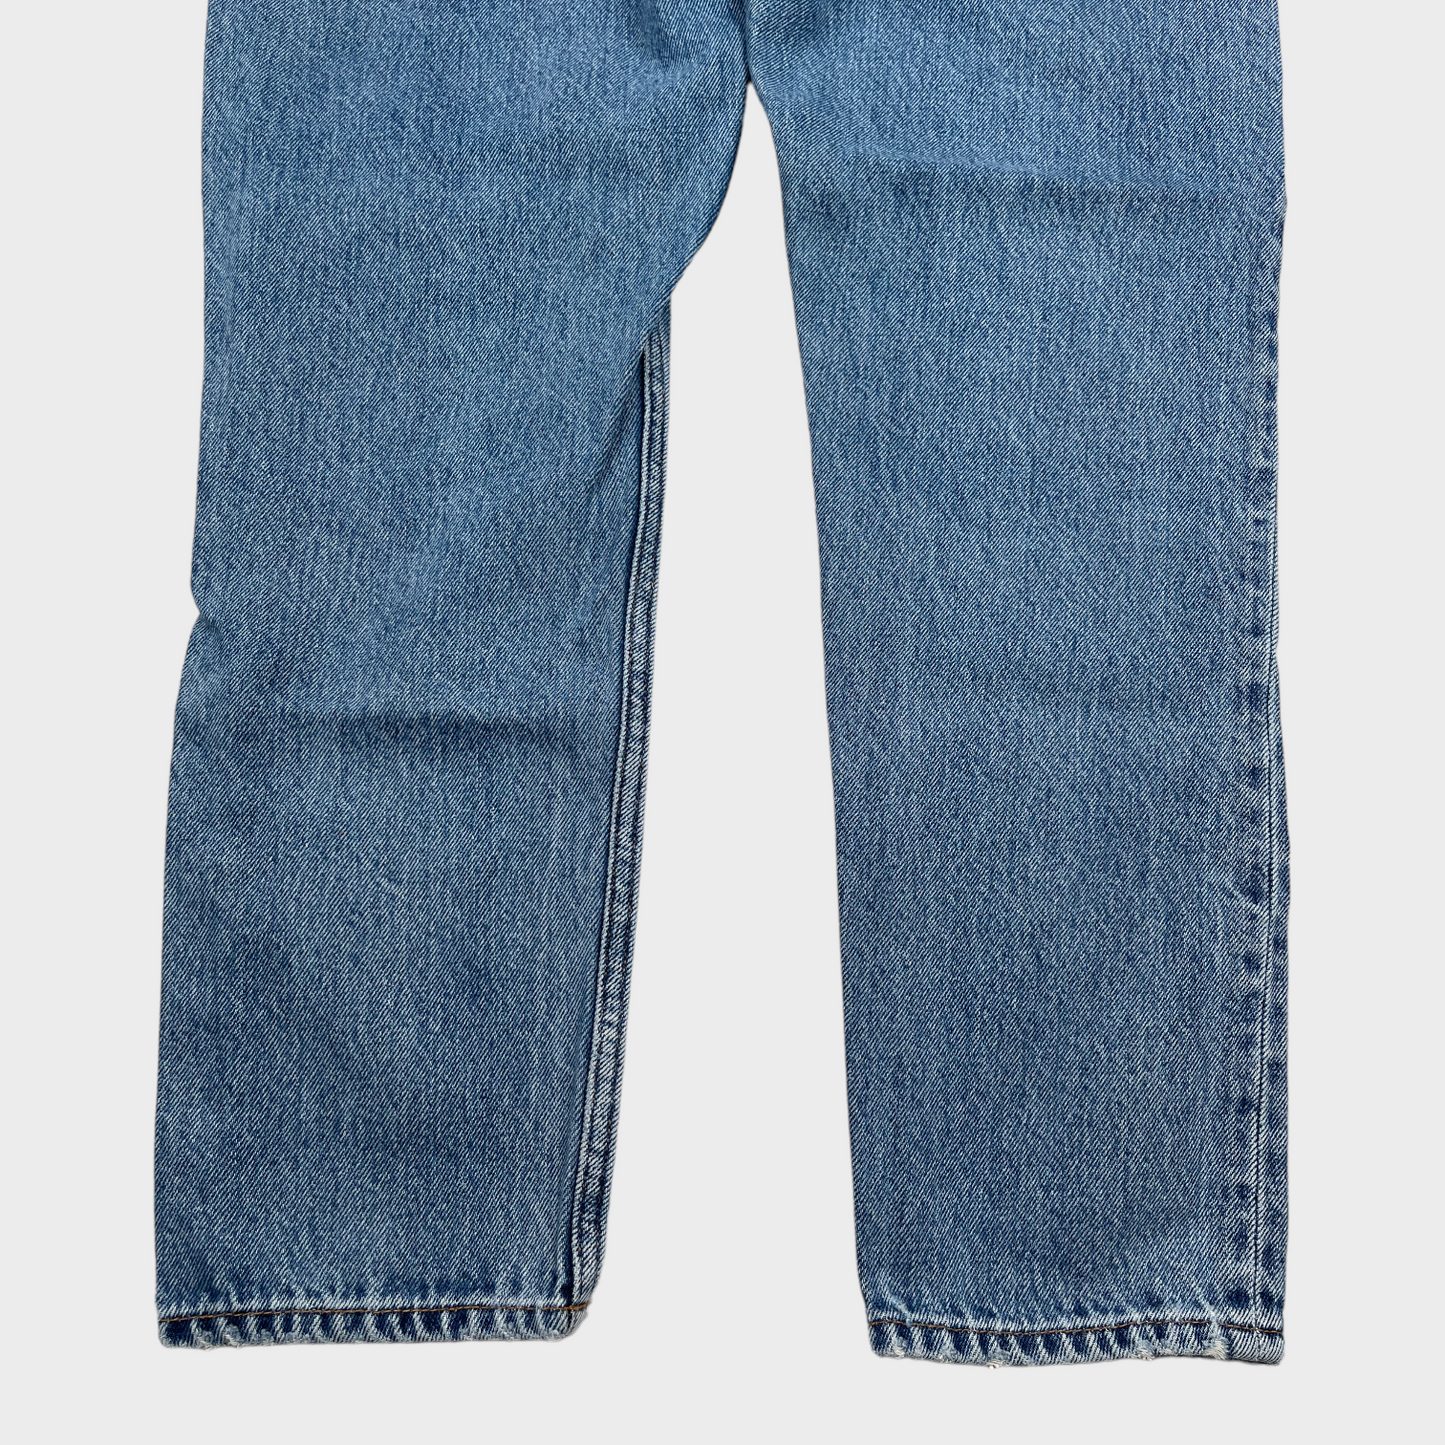 ETICA Alex High Rise Vintage Skinny Jeans In Cottonwood Creek Women's Size 26